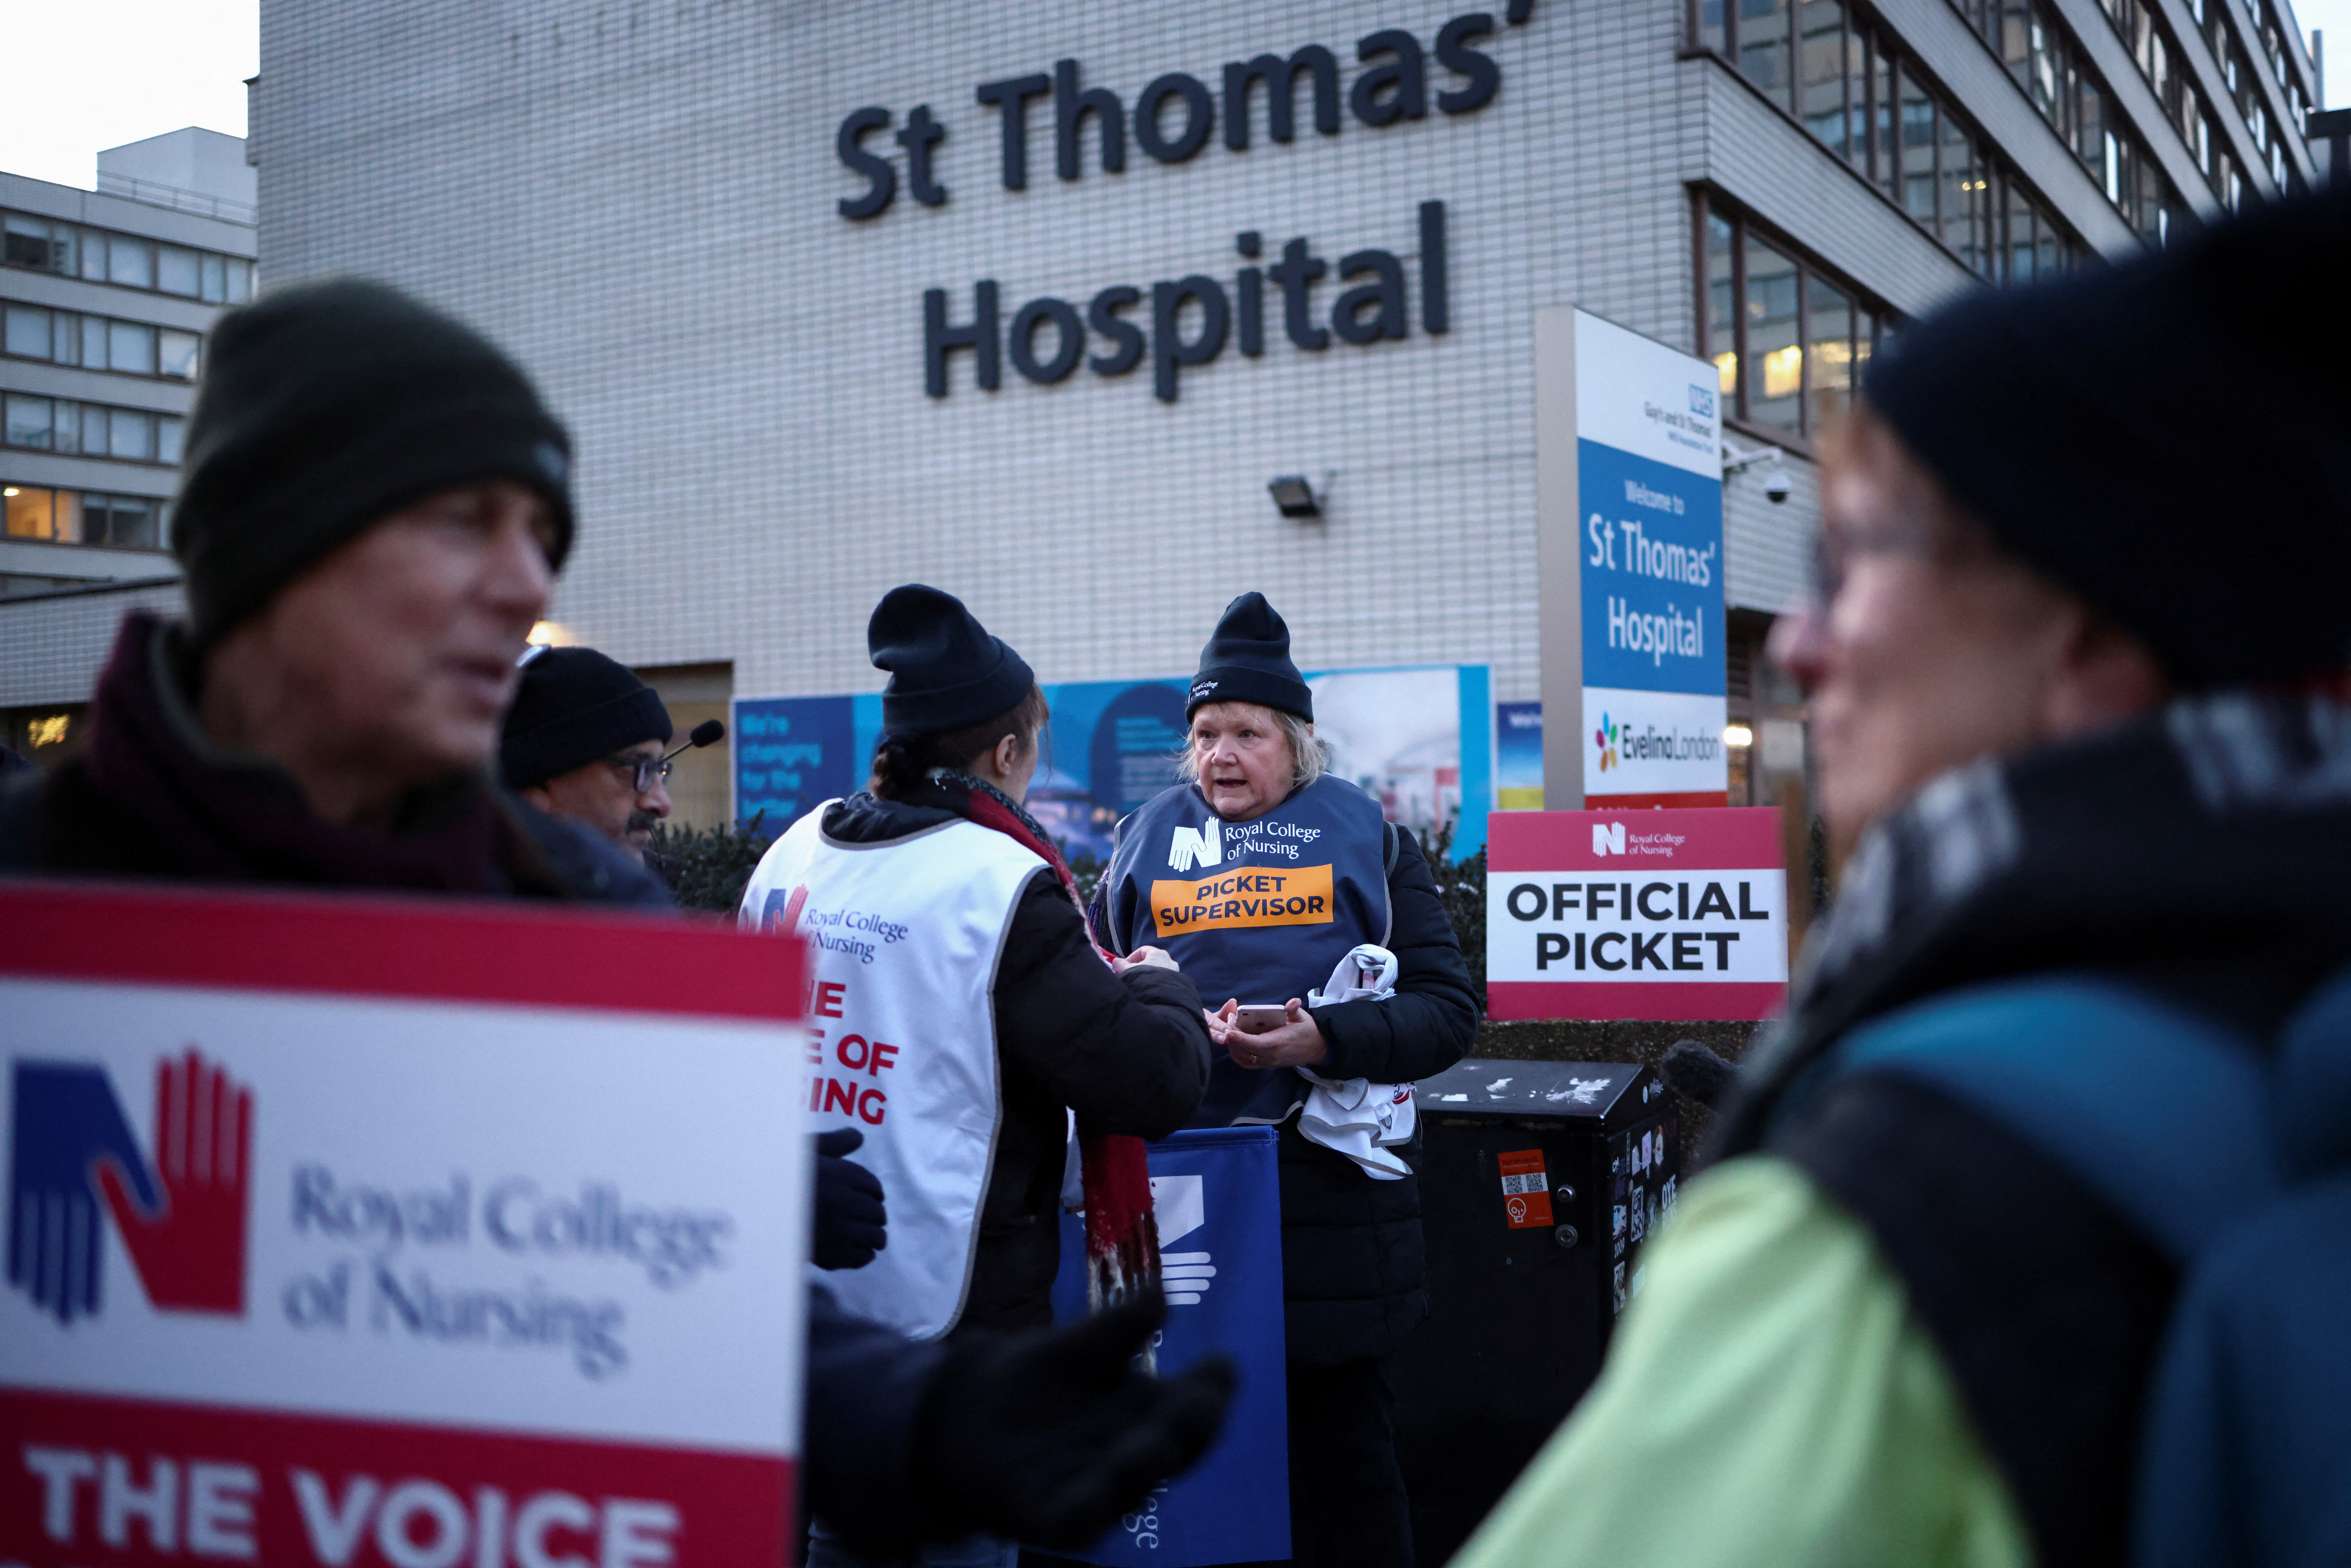 Nurses go on strike outside St Thomas' Hospital in London